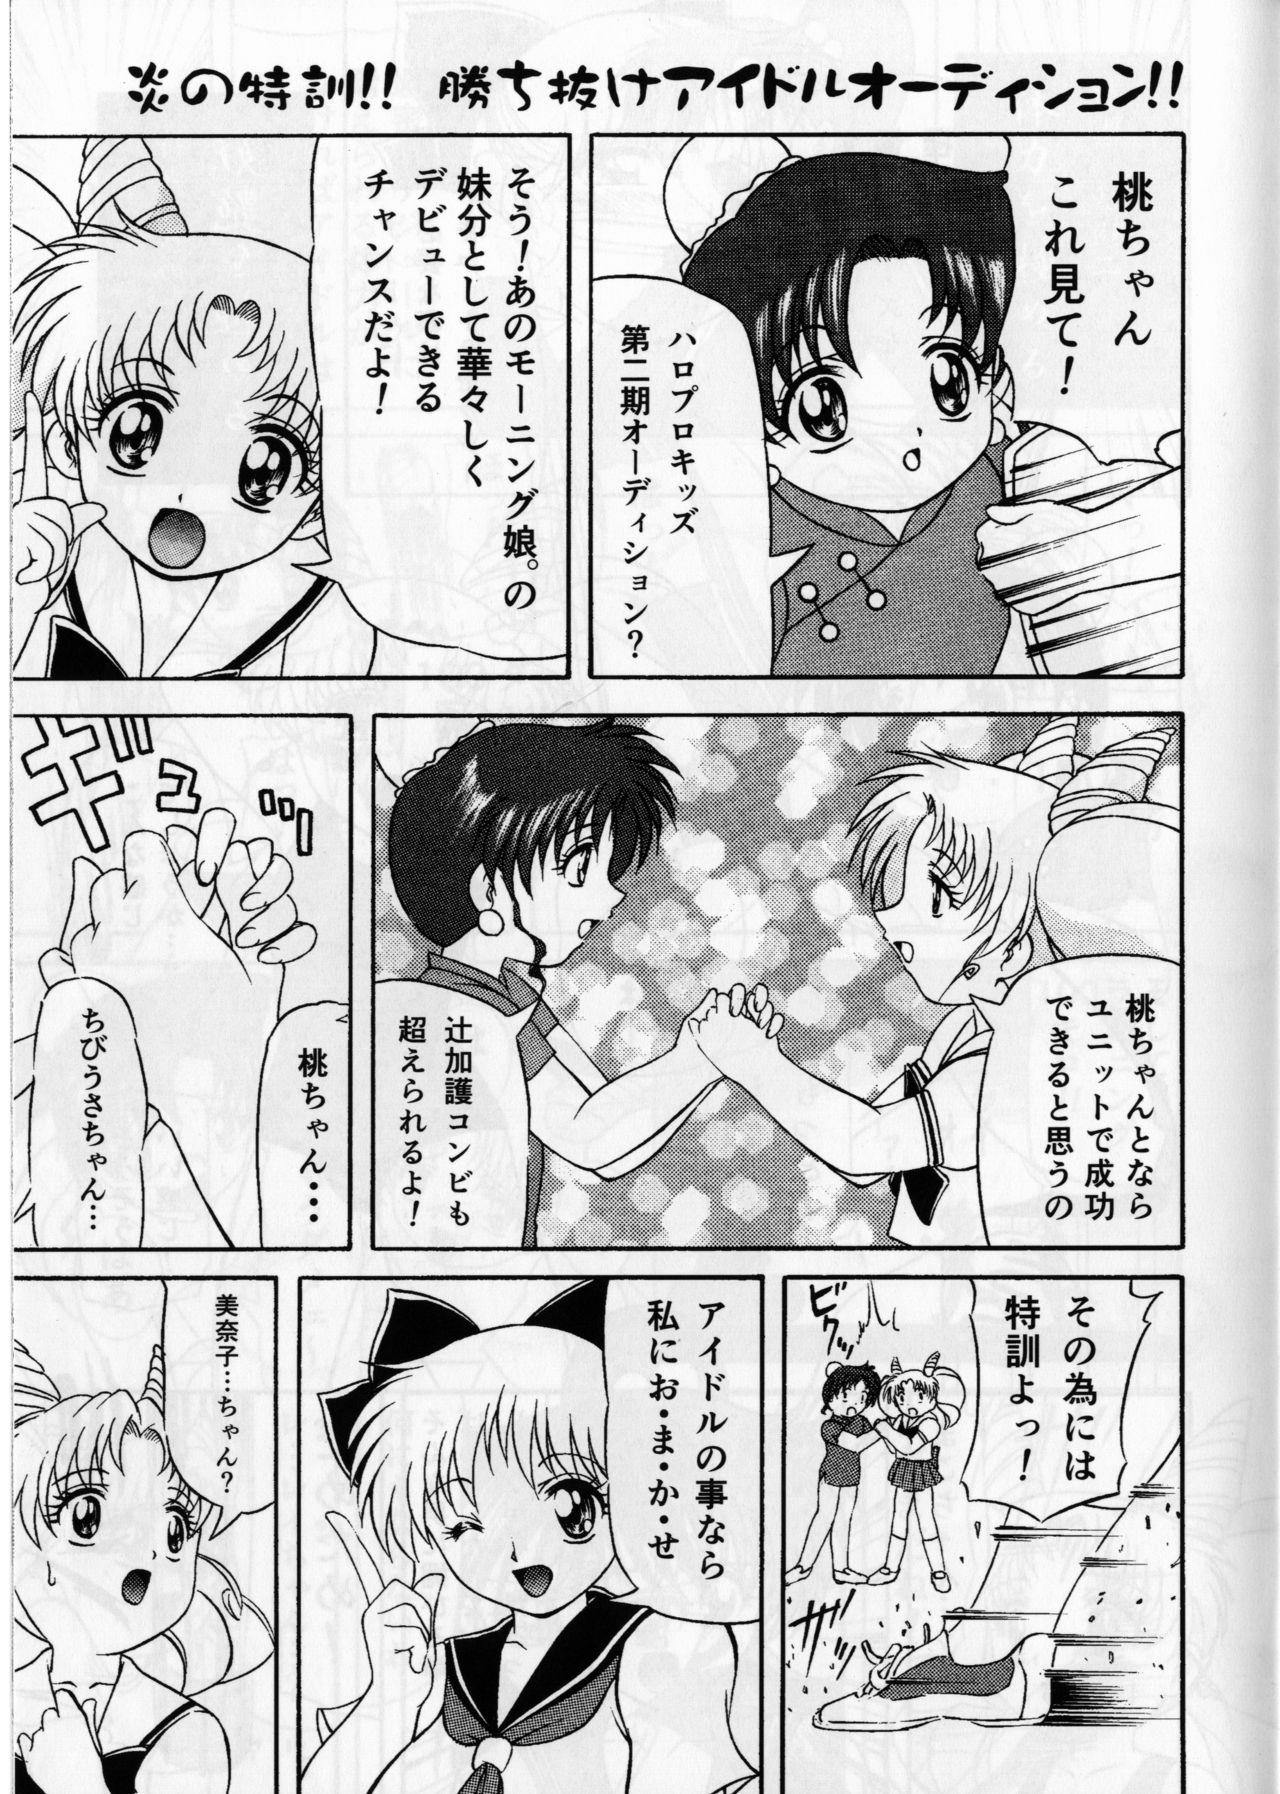 Pmv Pink Sugar 20th Anniversary Special - Sailor moon Cop - Page 7